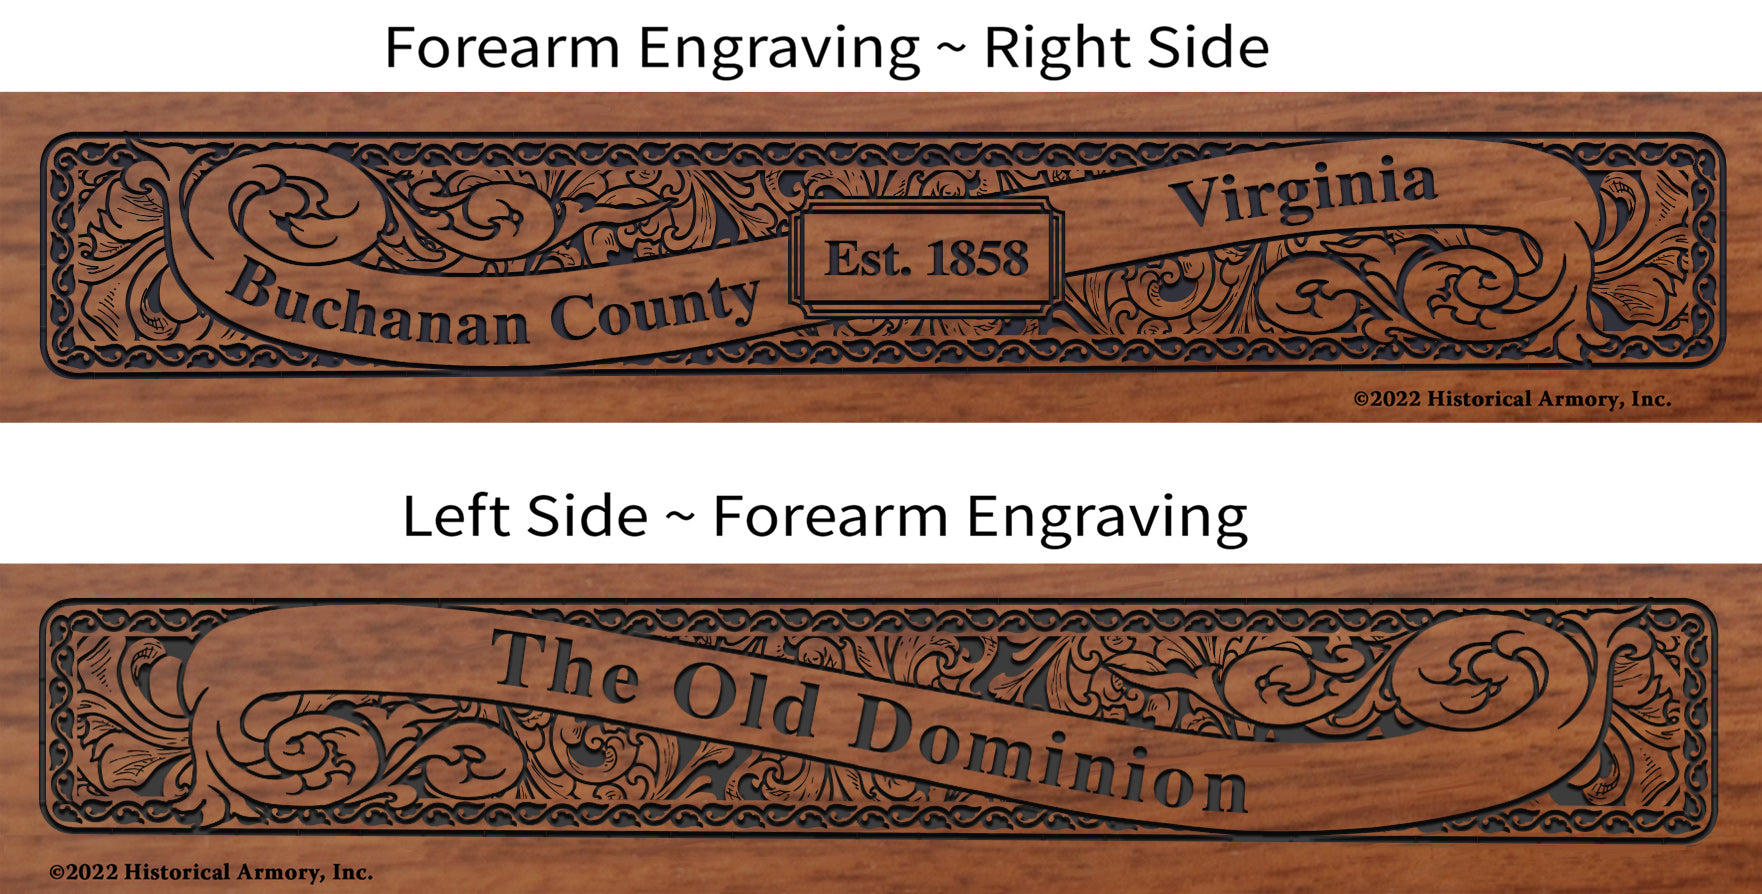 Buchanan County Virginia Engraved Rifle Forearm